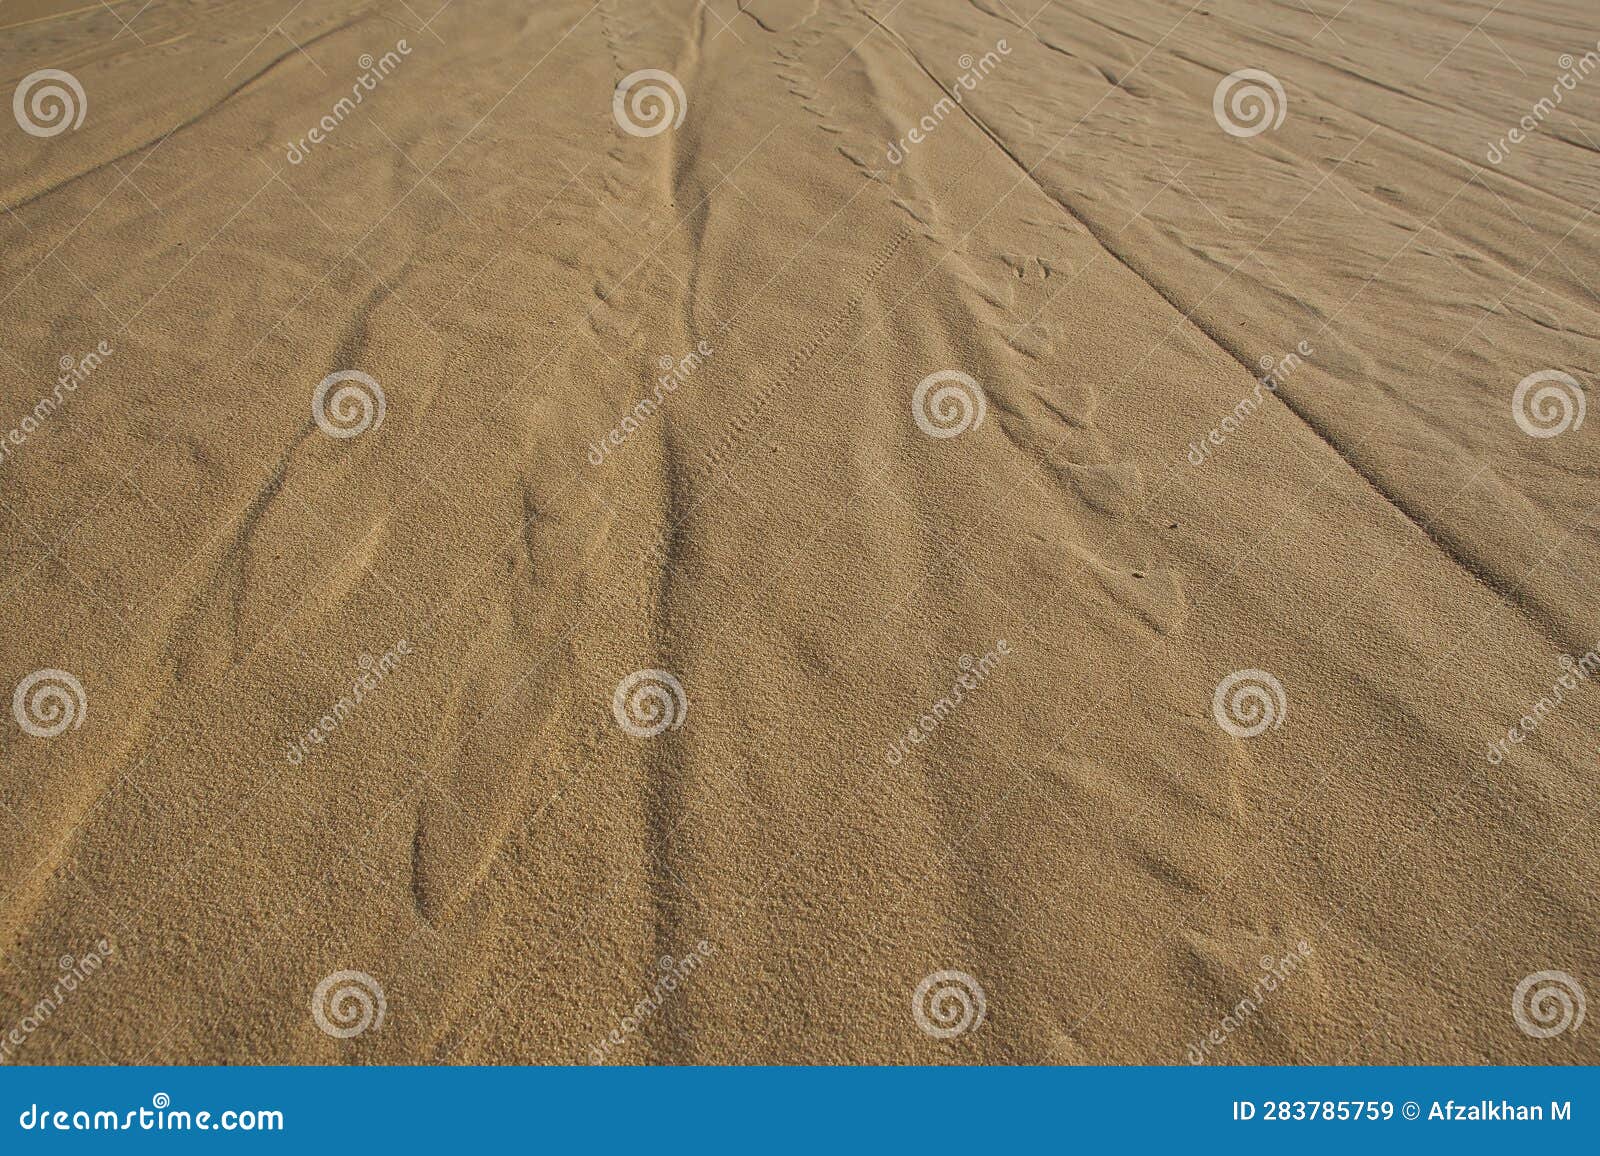 desert sand pattern at abqaiq dammam saudi arabia